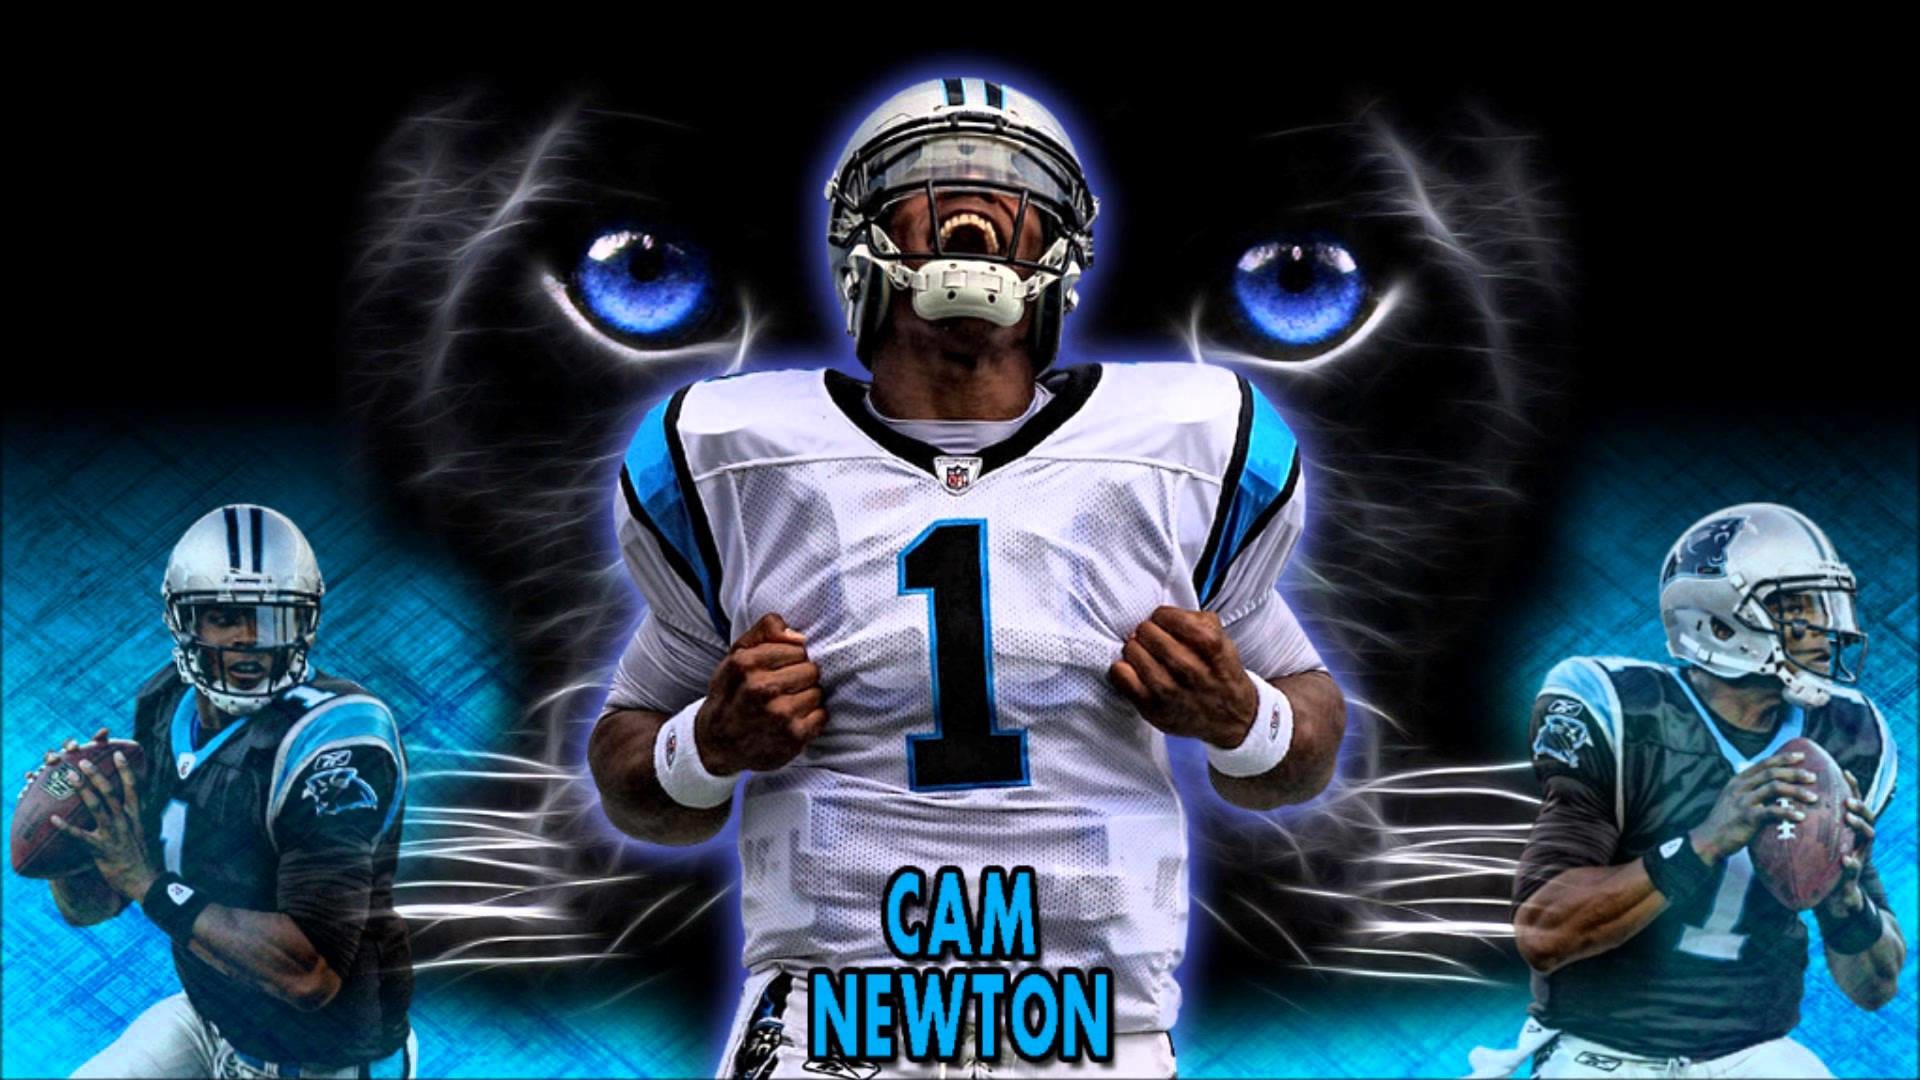 Cam Newton Wallpaper HD Image